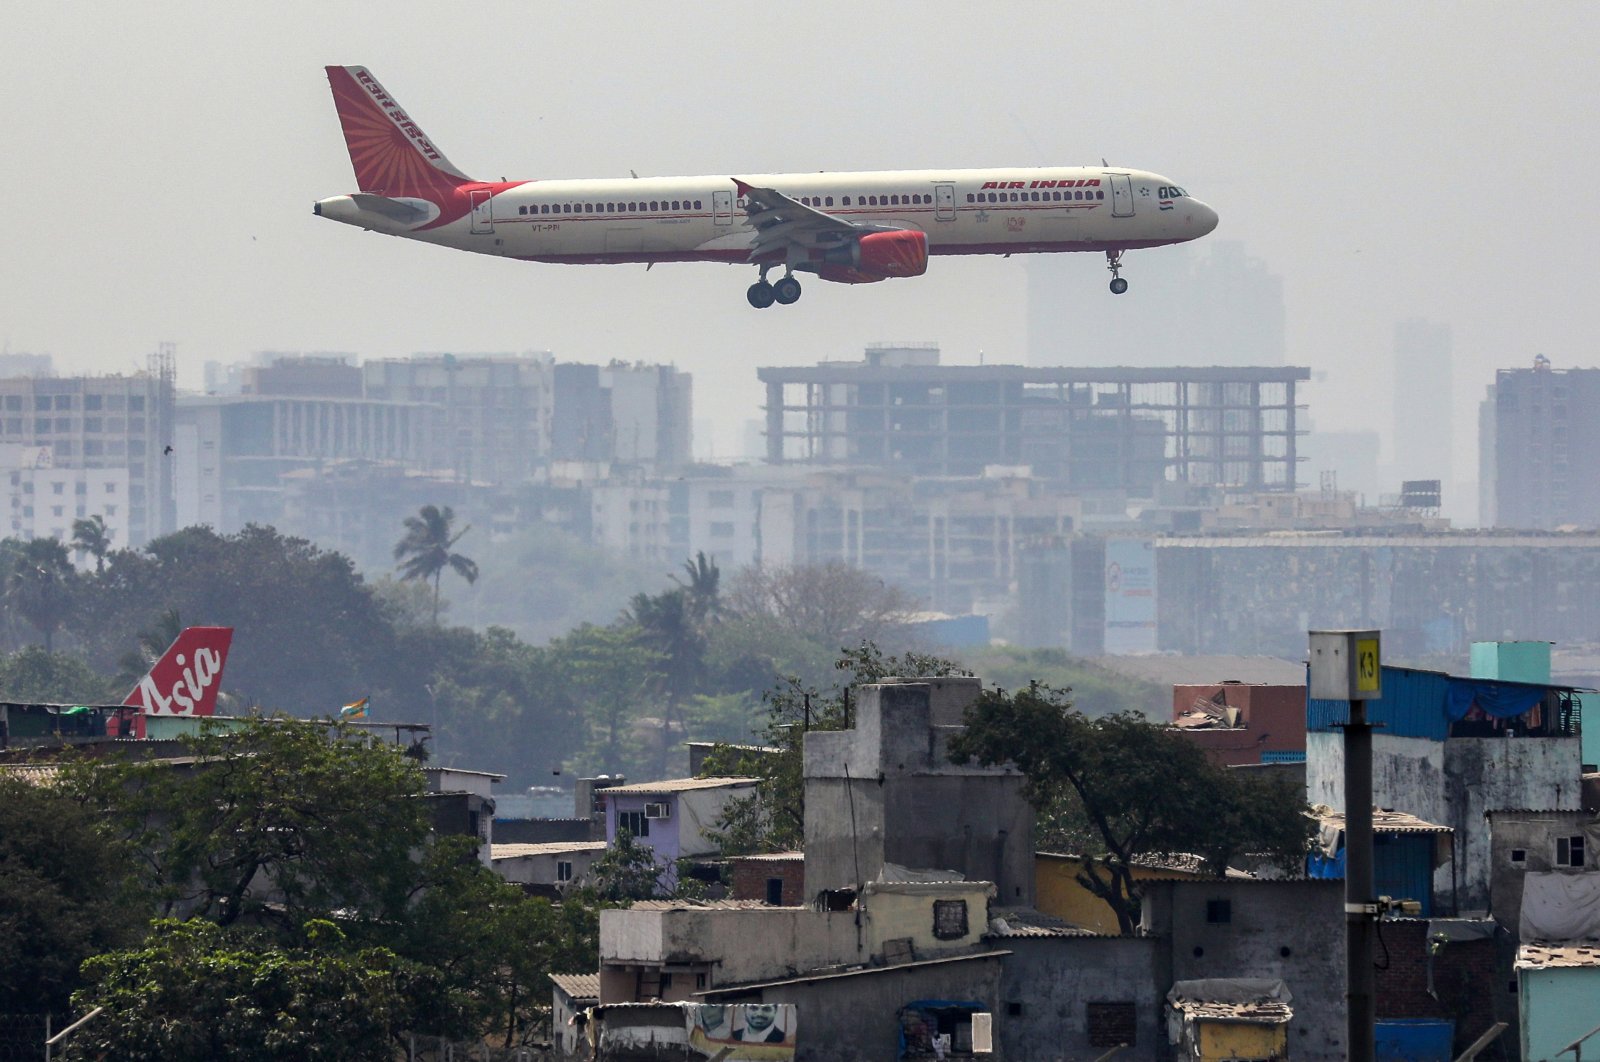 An Air India passenger jet prepares to land at Chhatrapati Shivaji International Airport in Mumbai, India, Feb. 22, 2023. (EPA Photo)